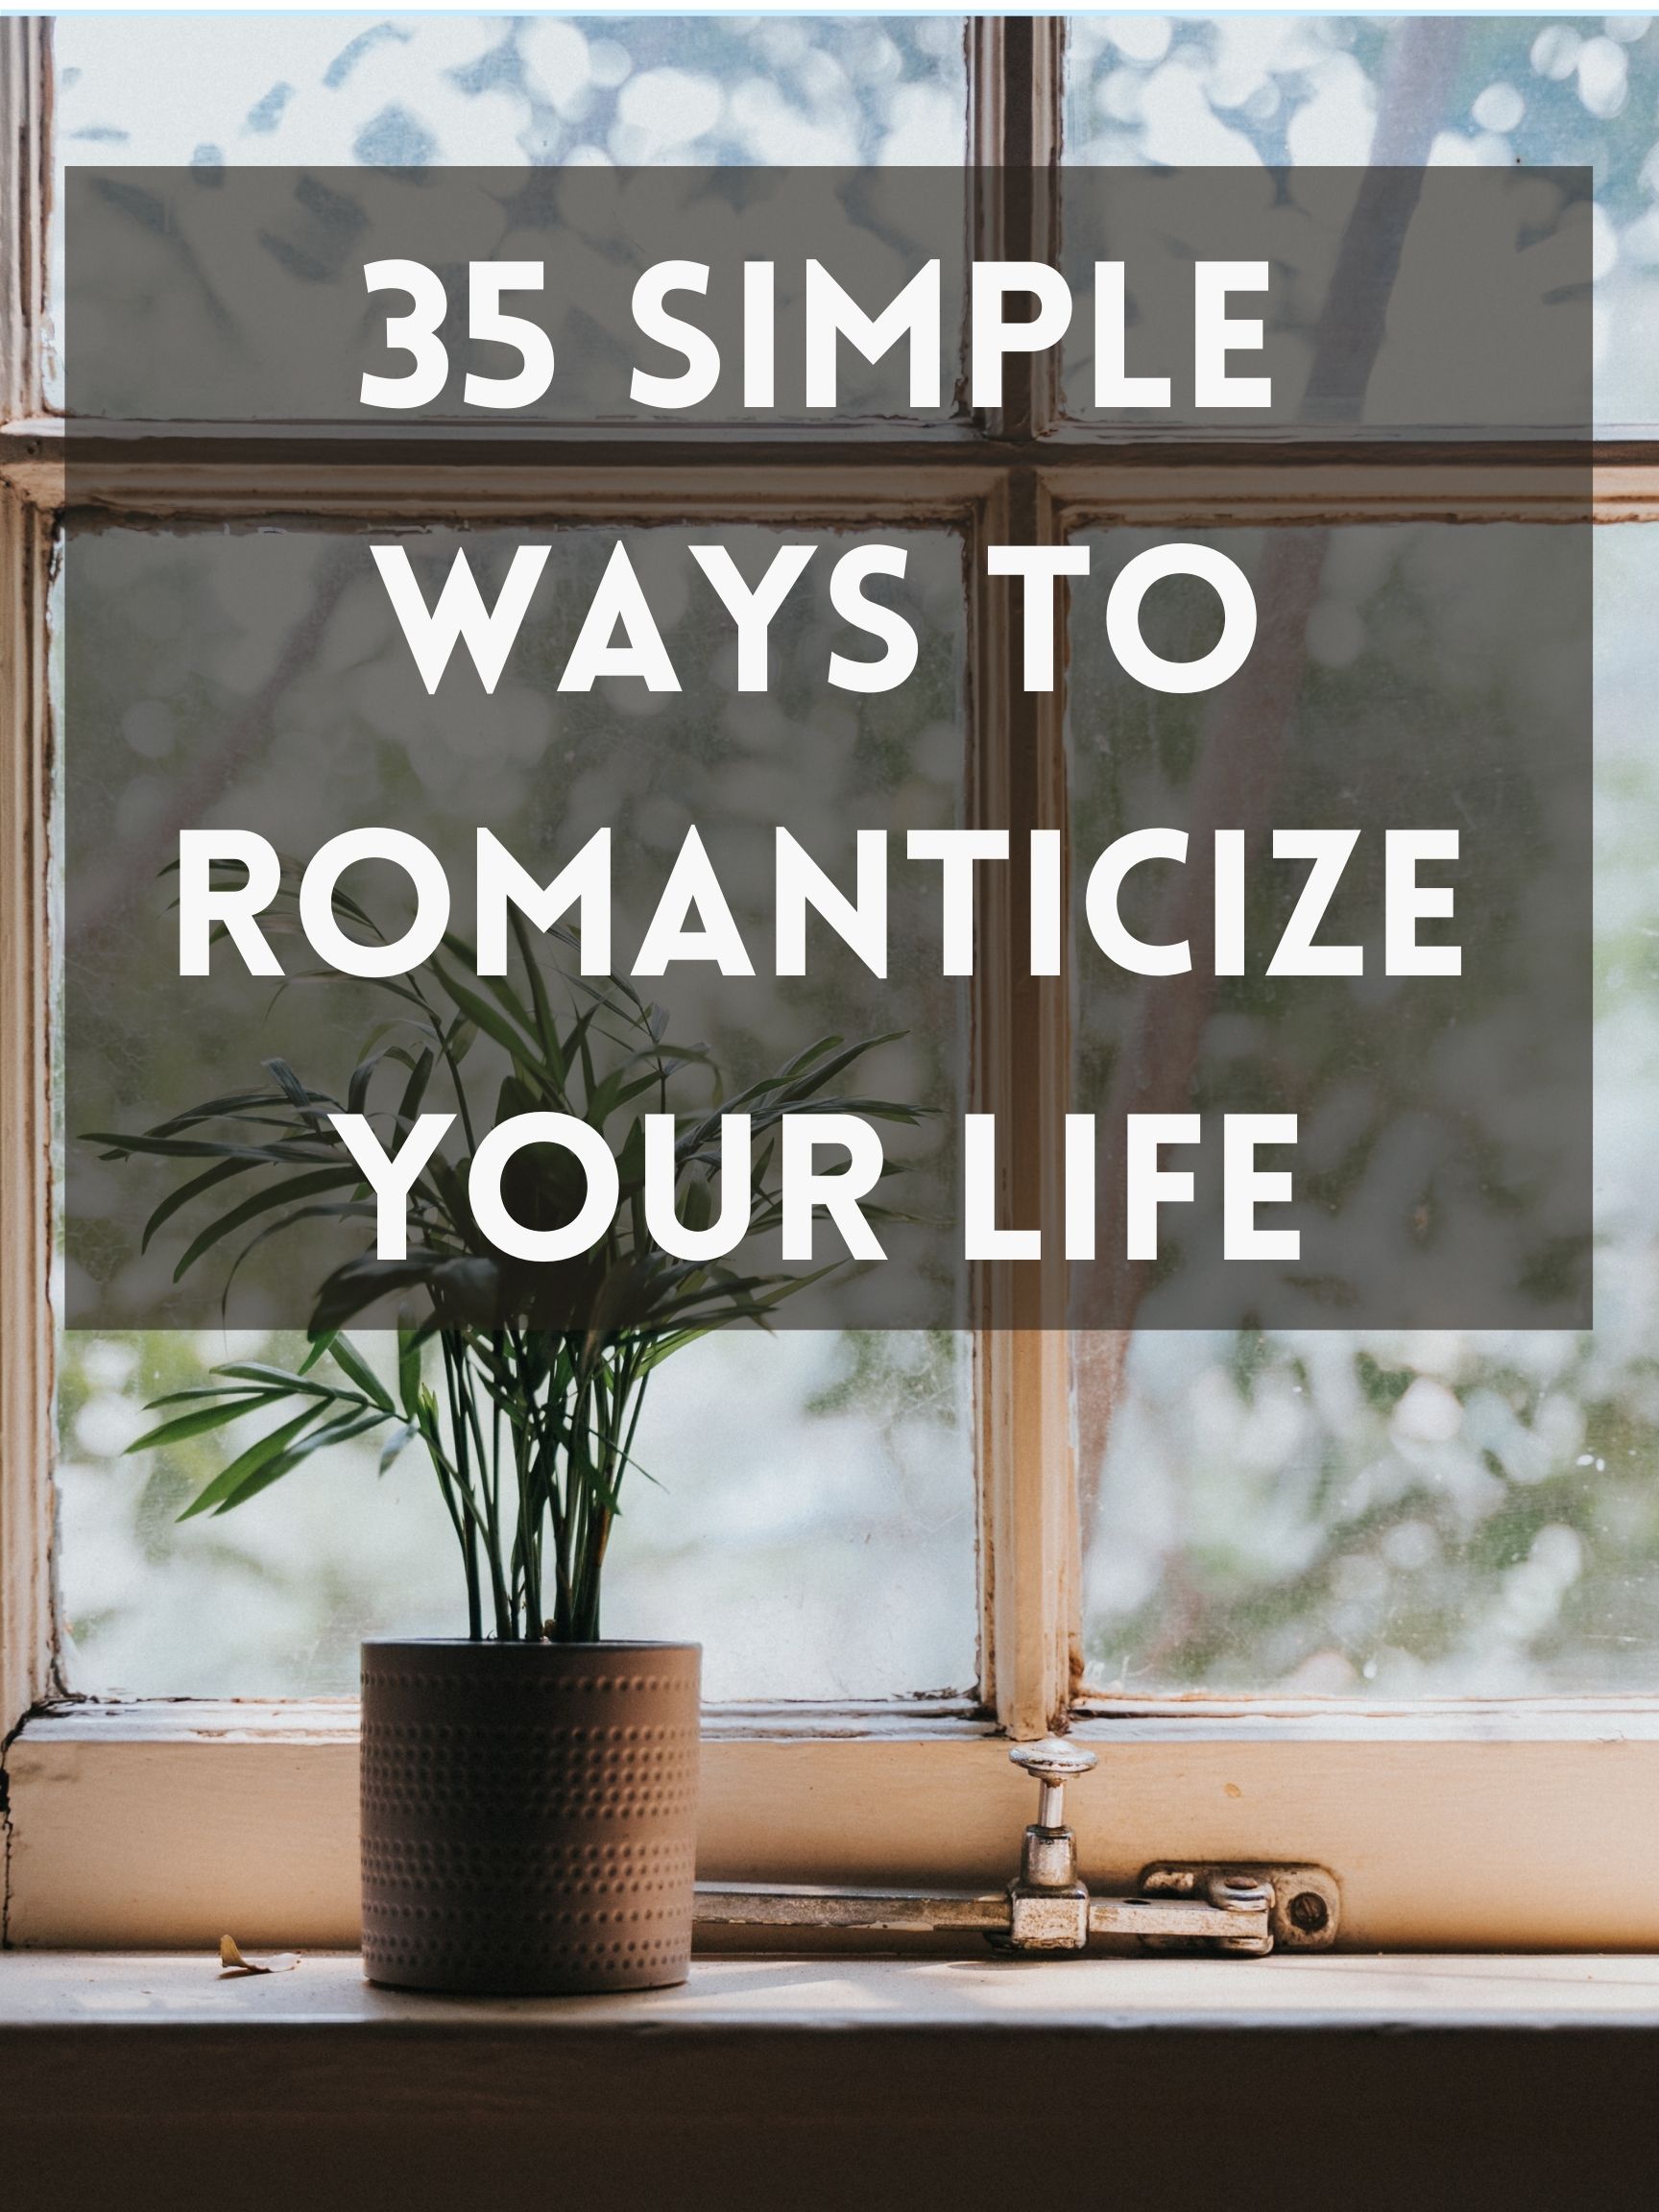 ways to romanticize your life